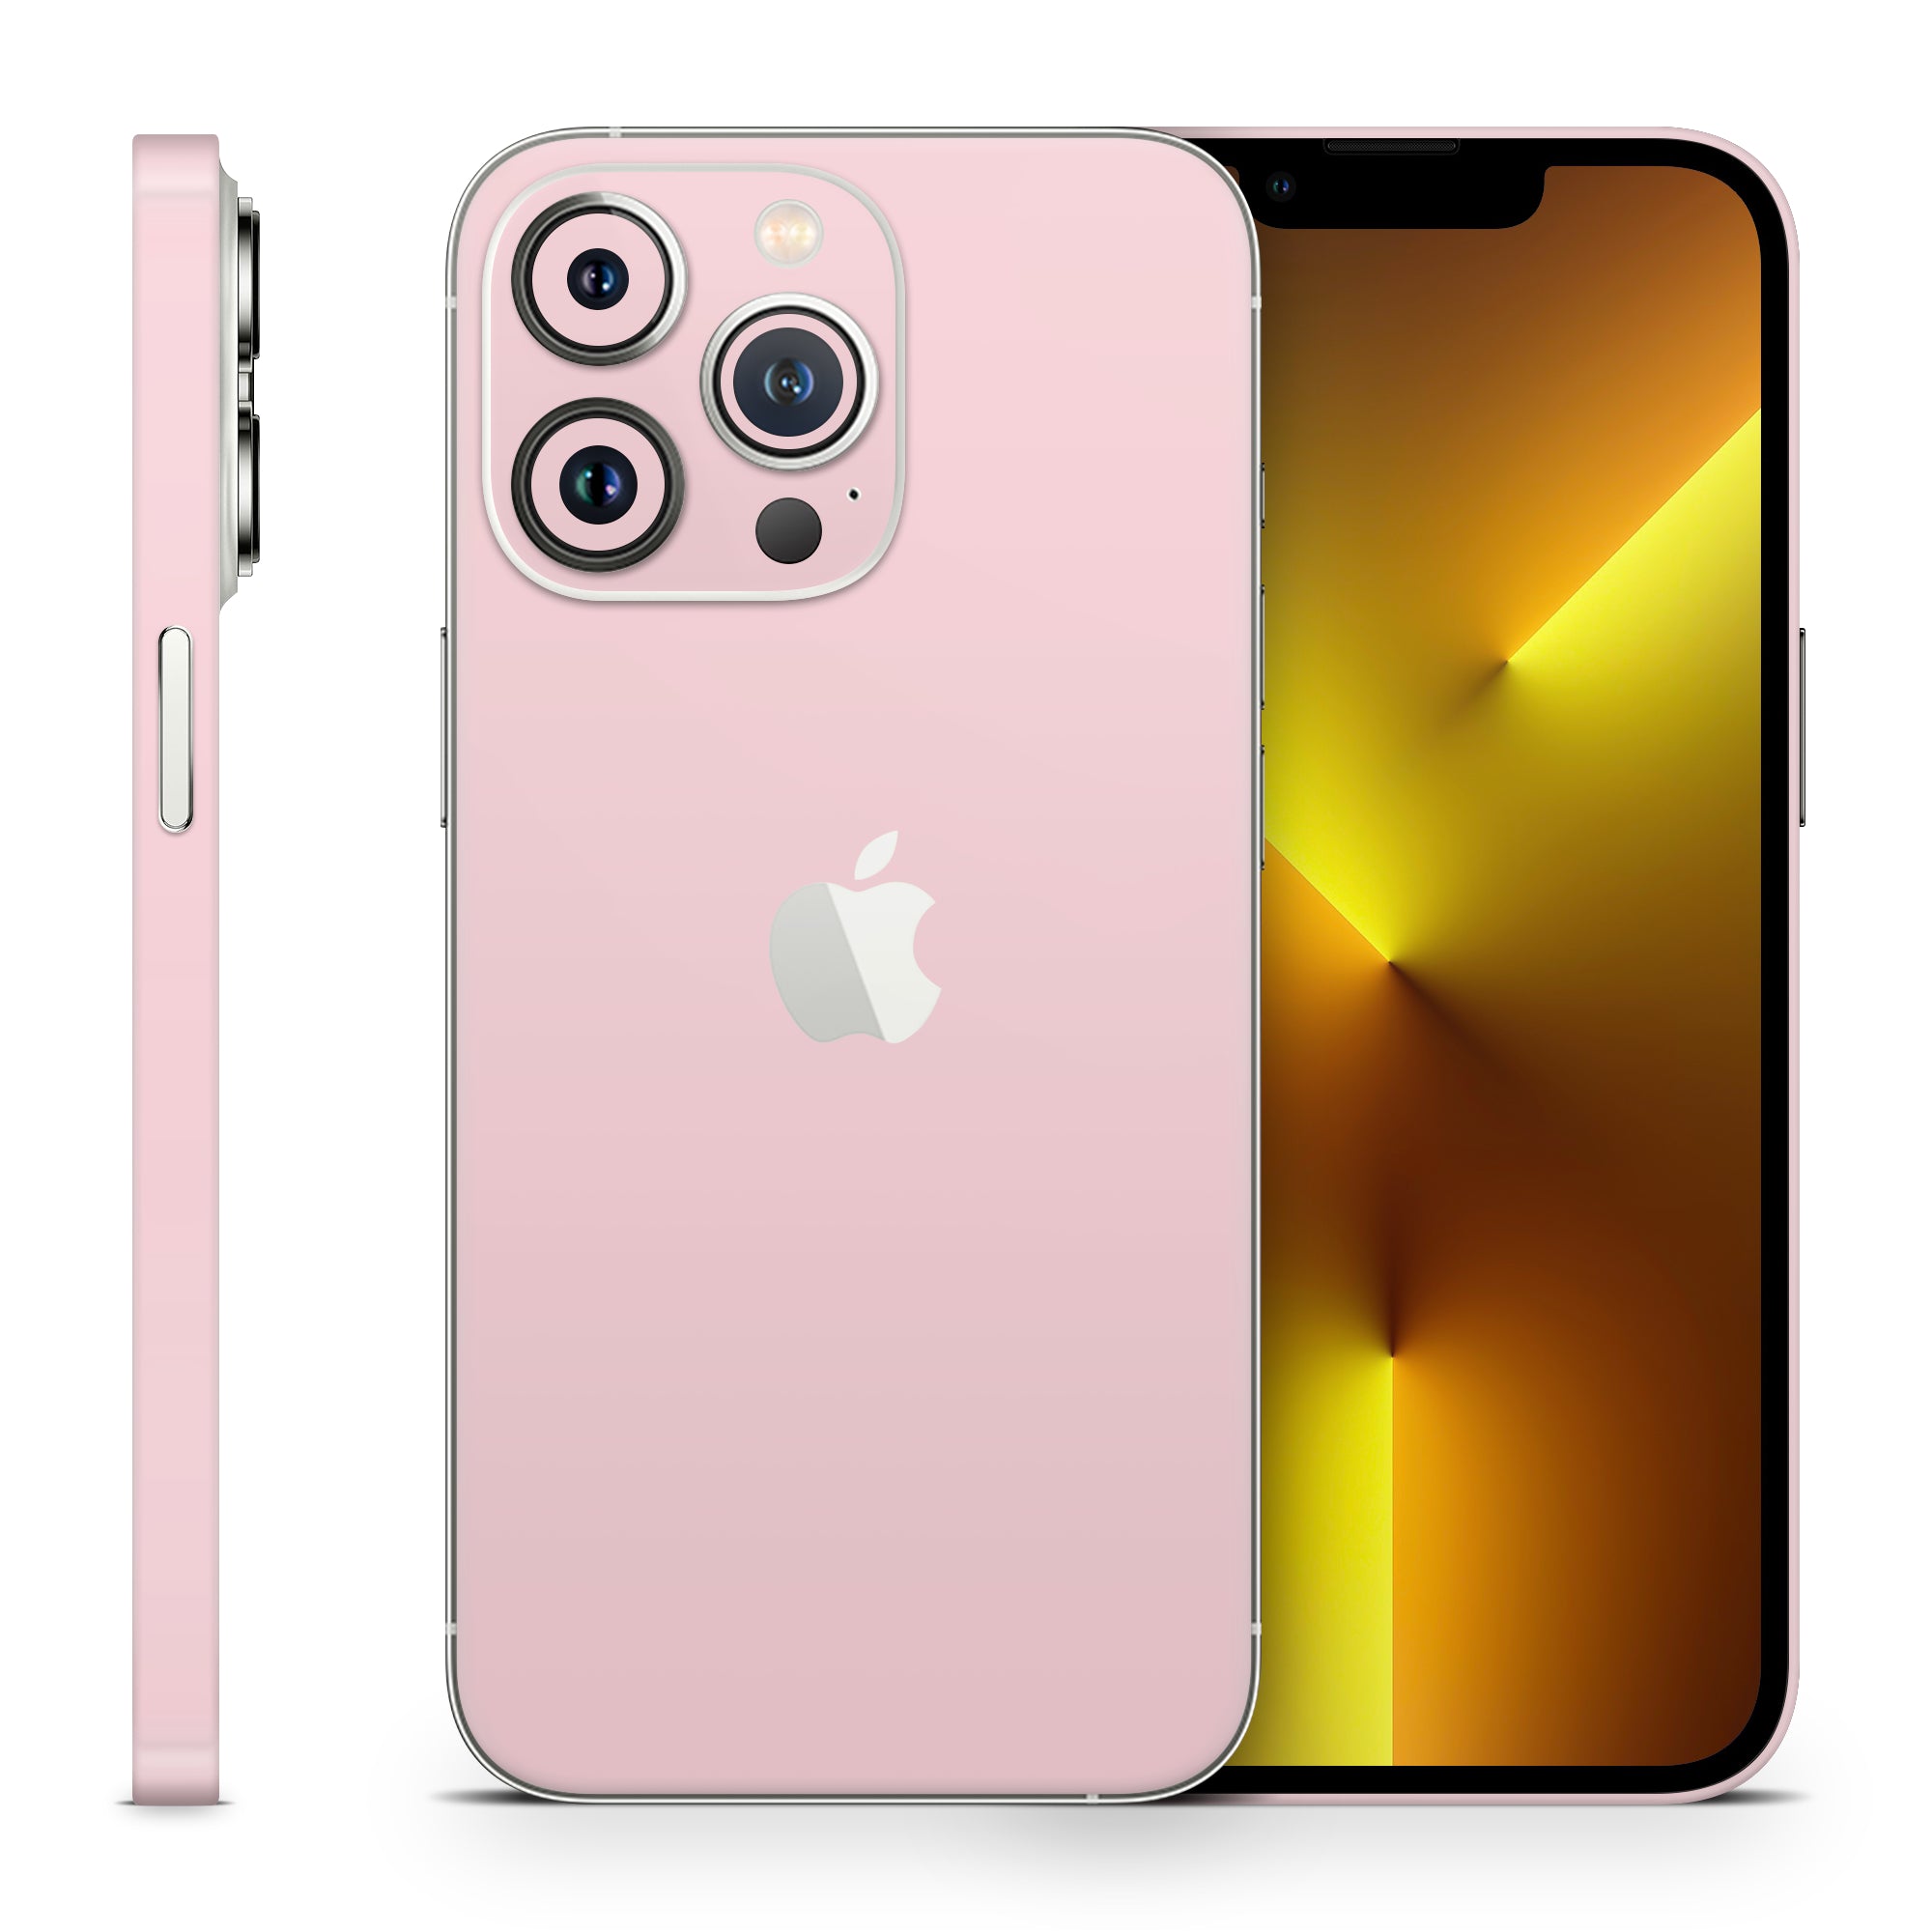 Iphone Skin - Skin IPhone - Pale Pink